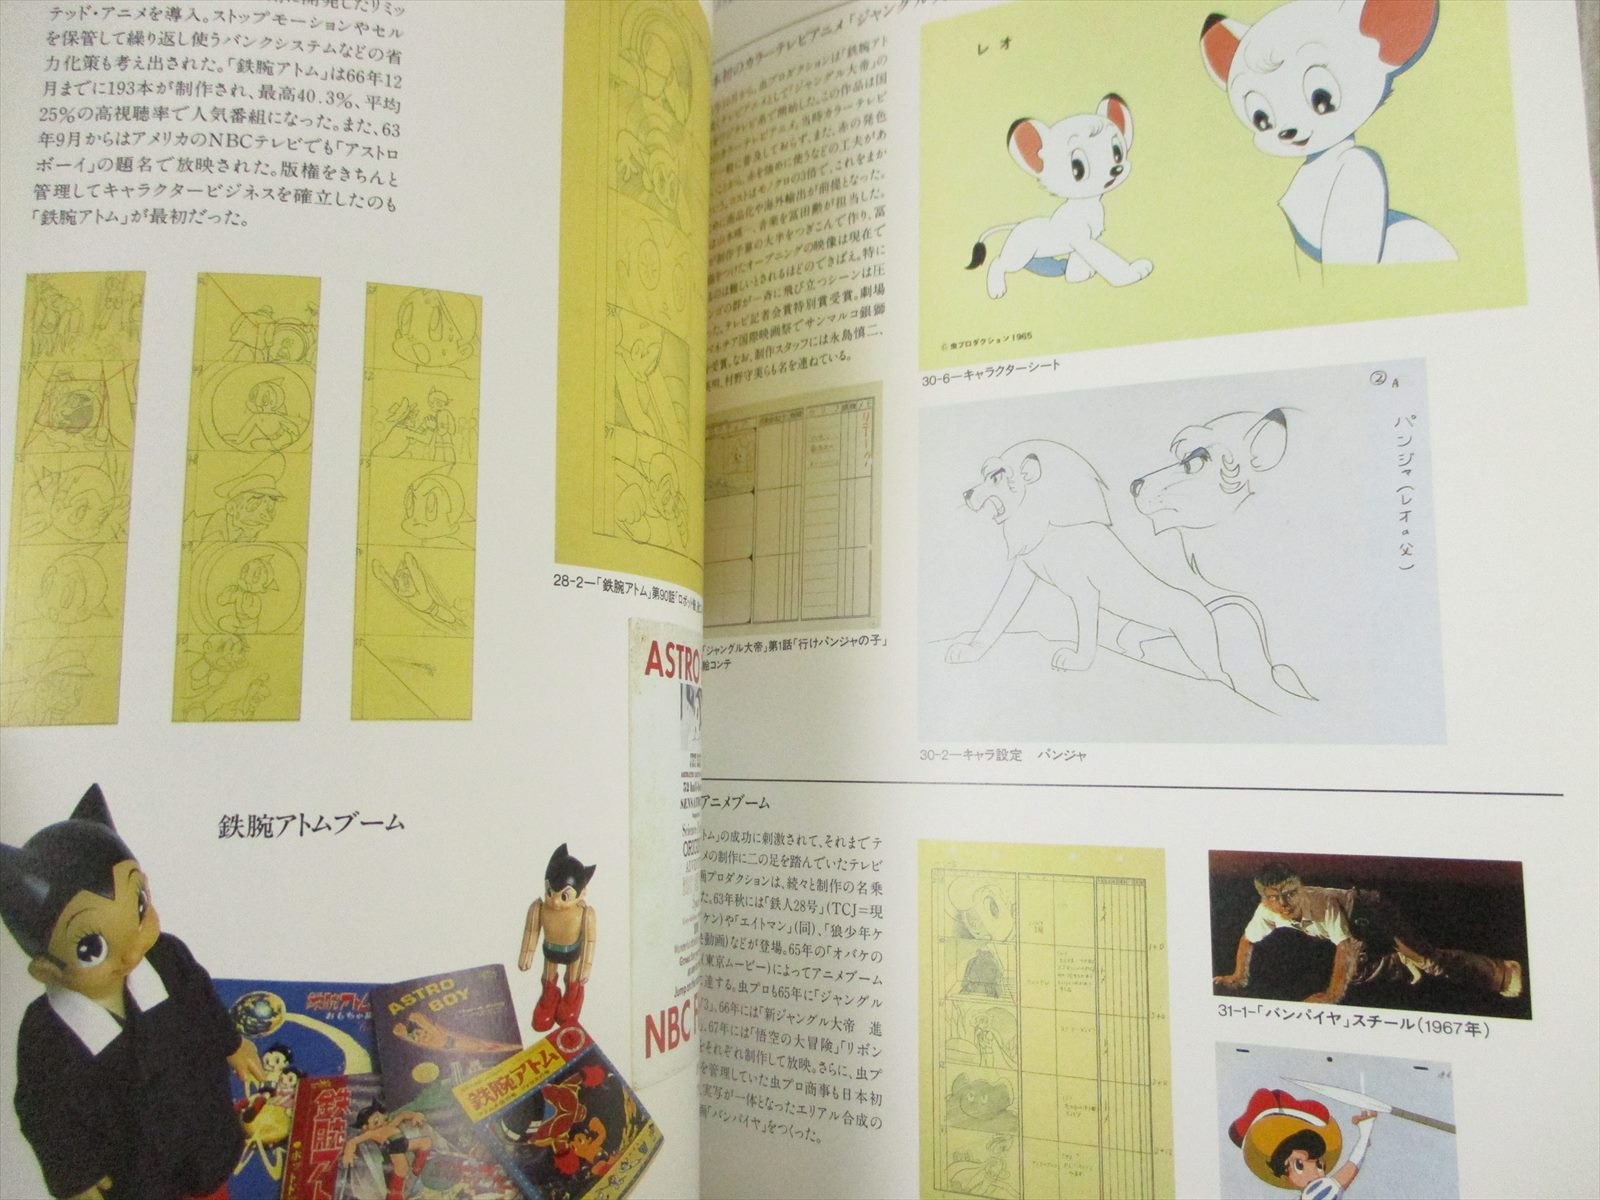 Collectibles Osamu Tezuka Manga Museum Art Works Fanbook Ltd Book Atom Japanese Anime Collectibles